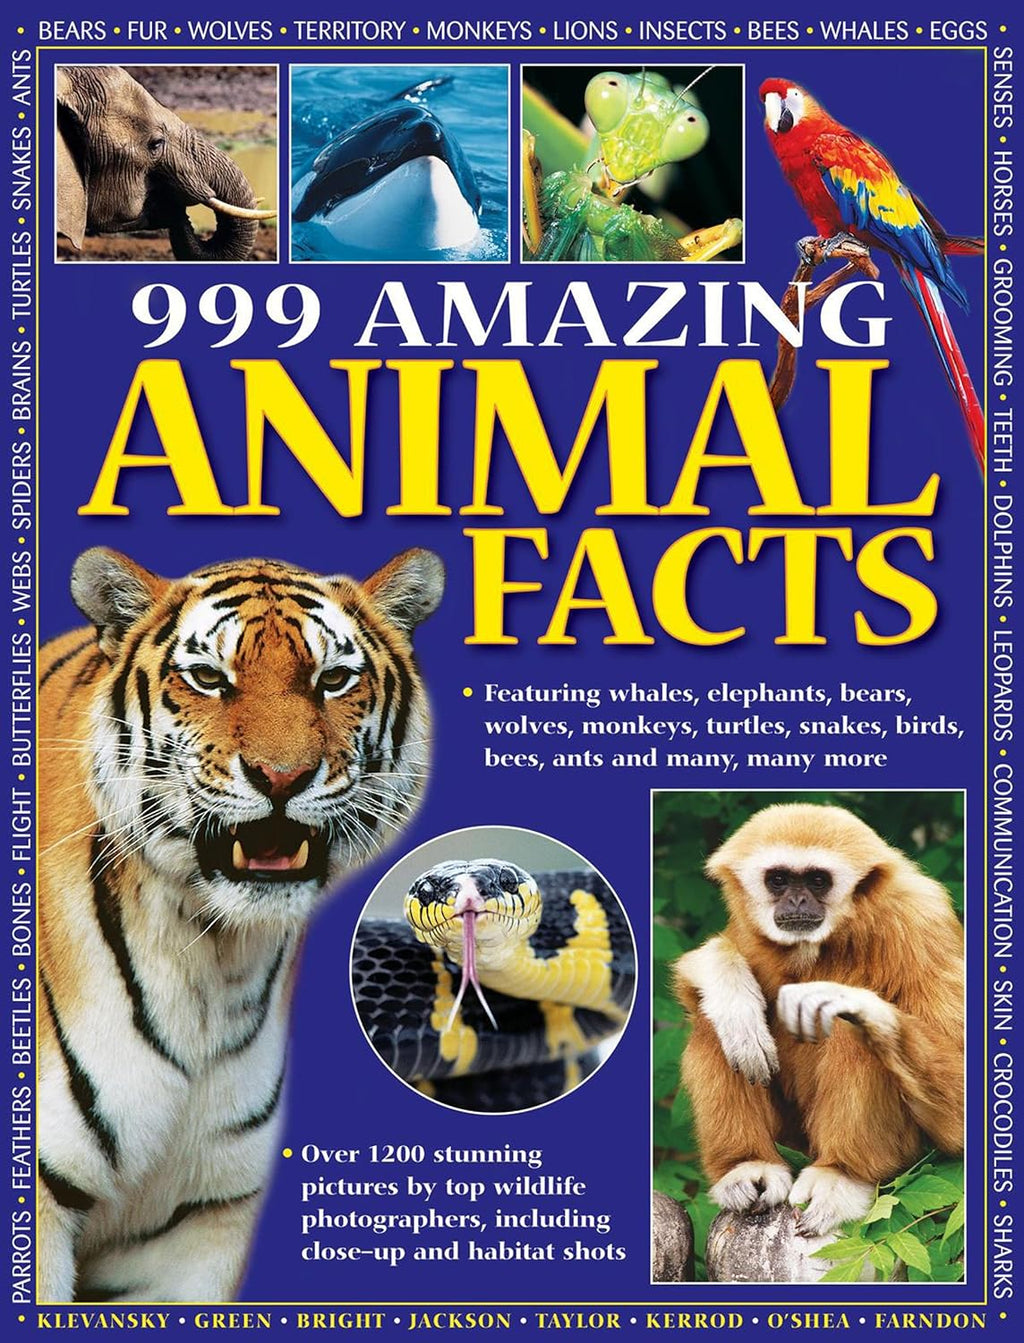 999 Amazing Animal Facts